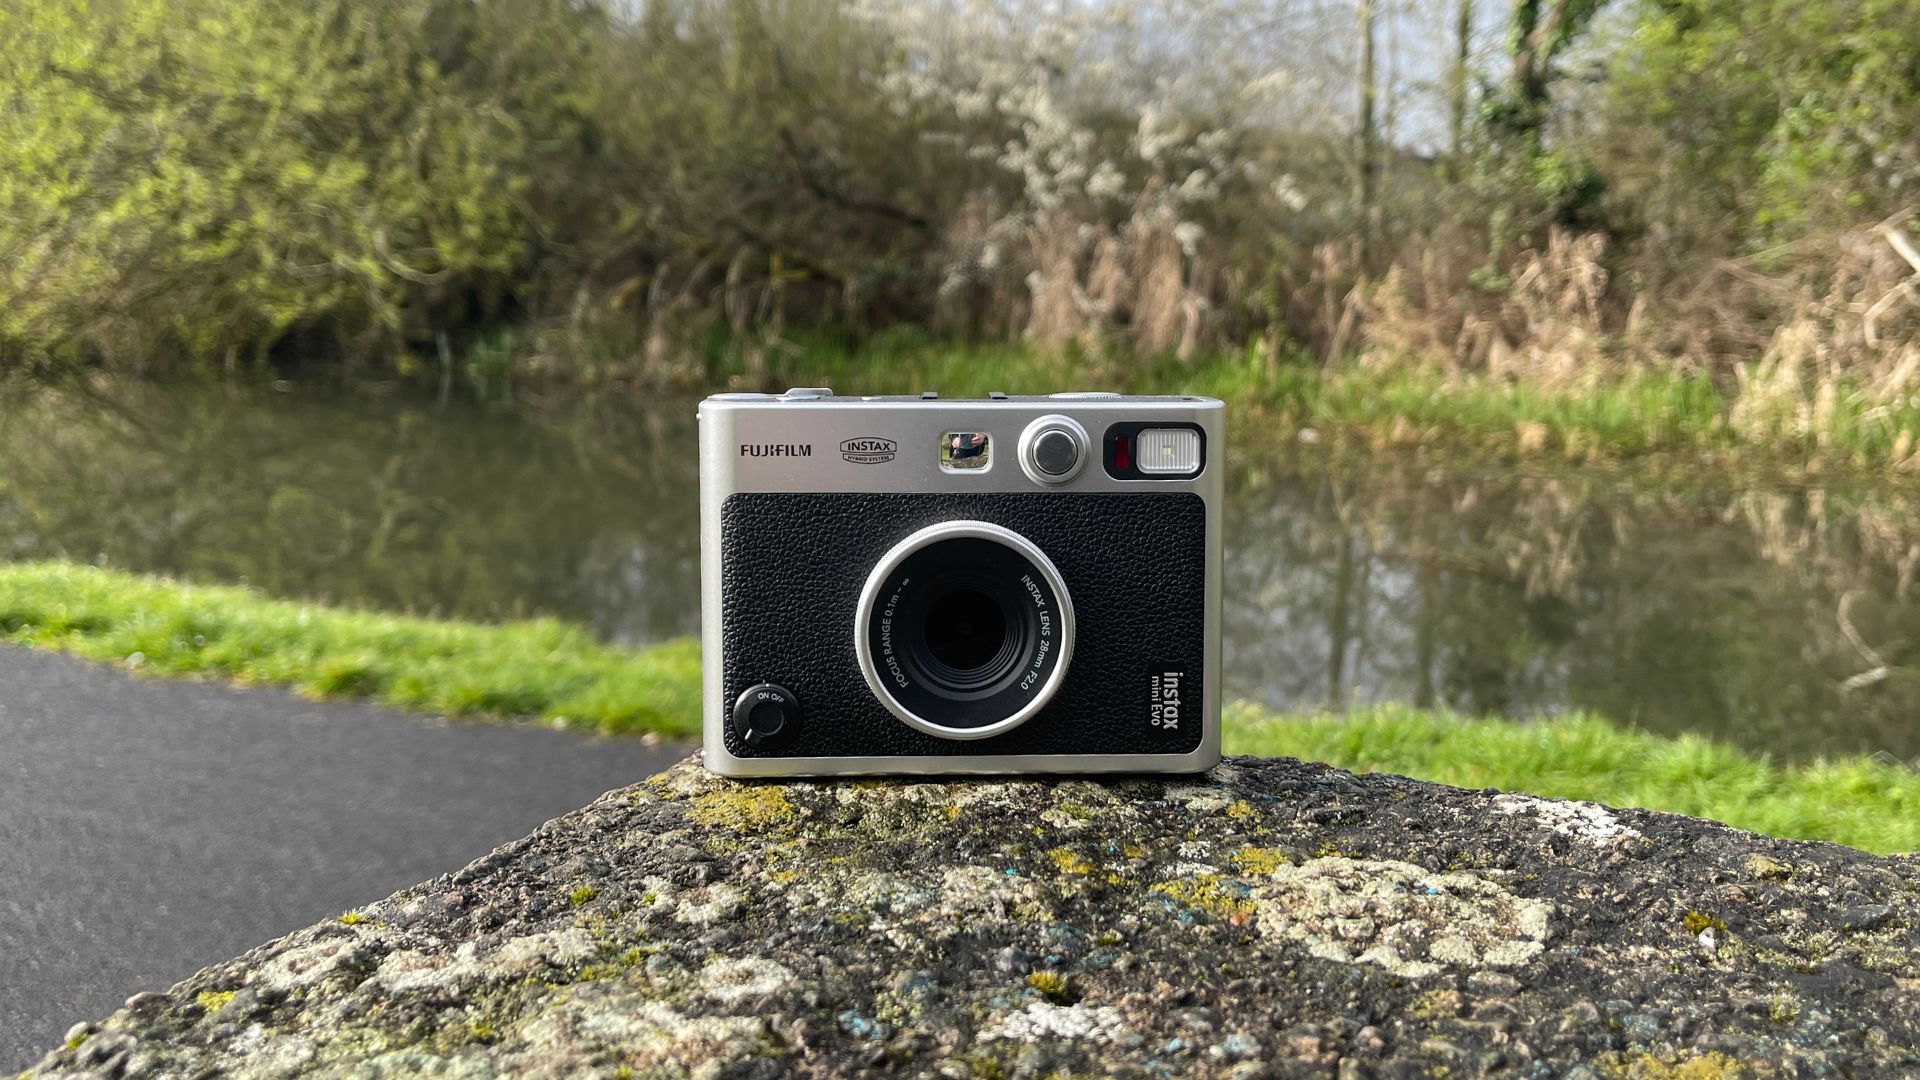 Fujifilm Instax Mini Evo Instant Camera with Built-In Flash, Black